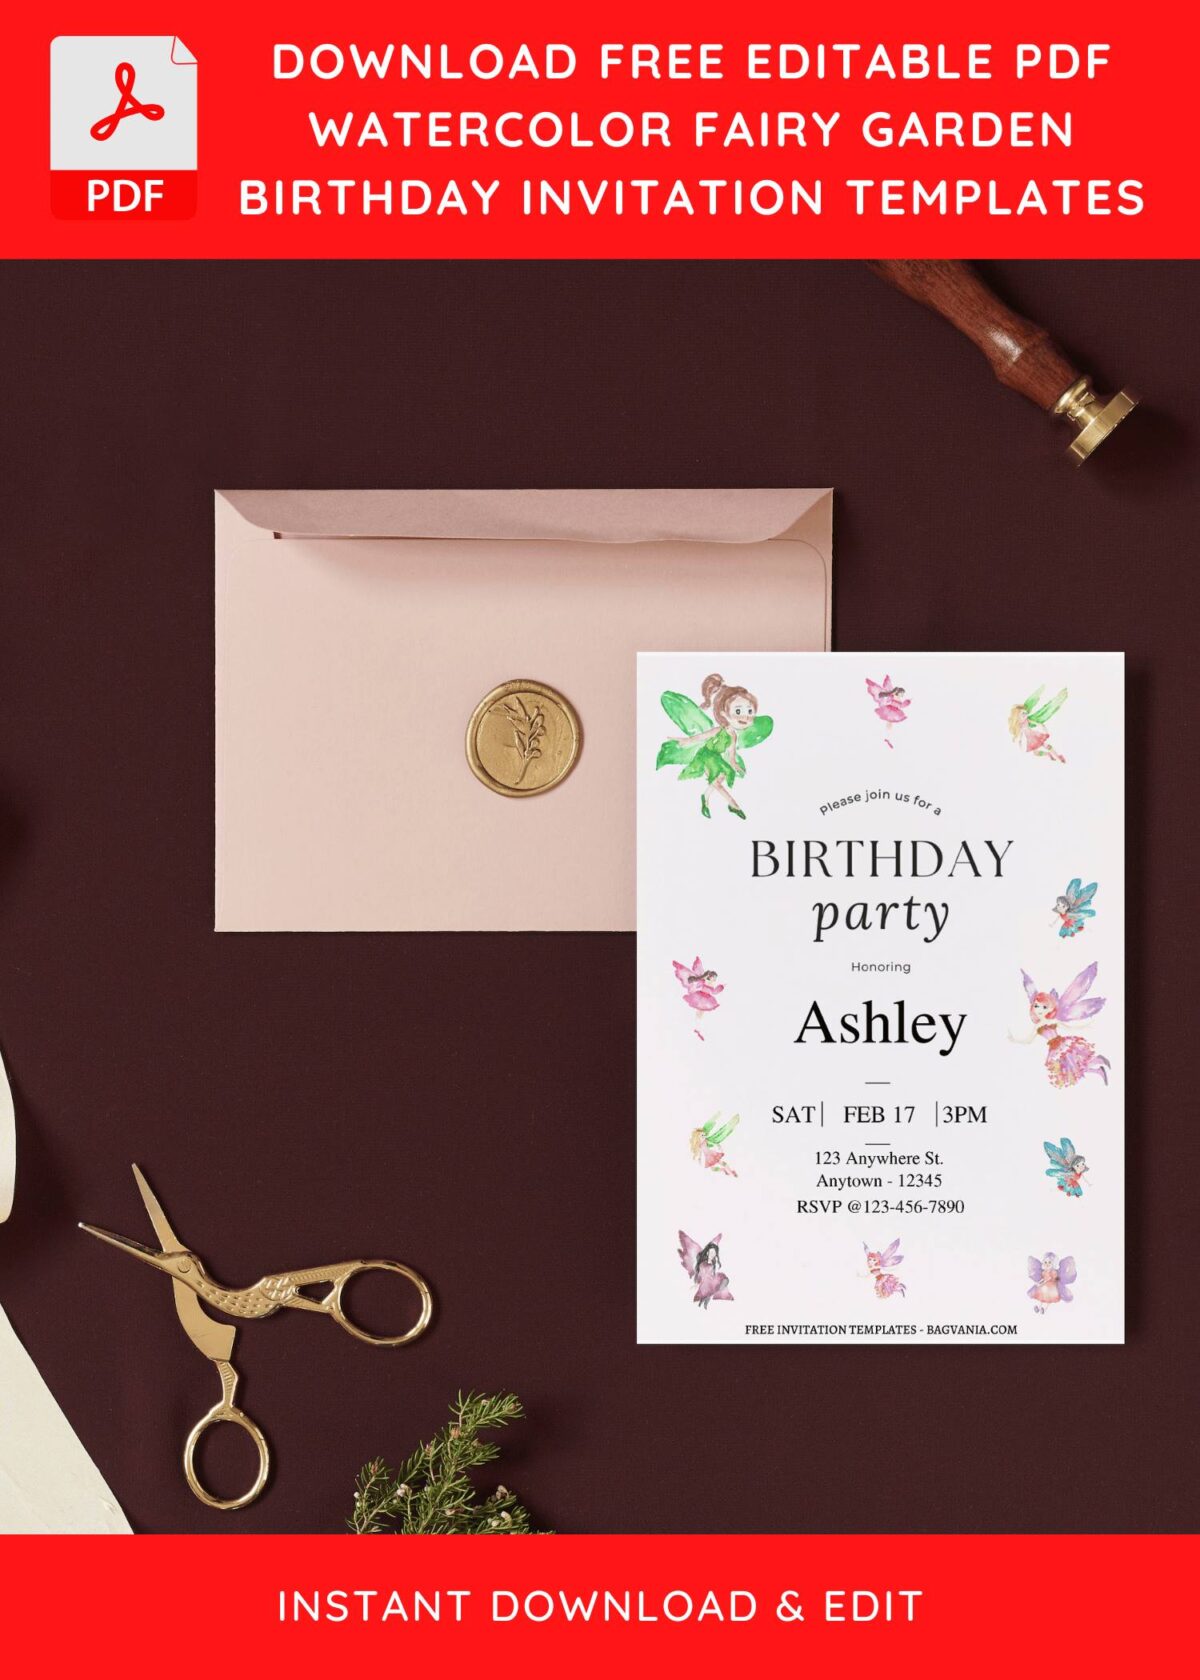 (Free Editable PDF) Simply Cute Watercolor Fairy Birthday Invitation Templates I